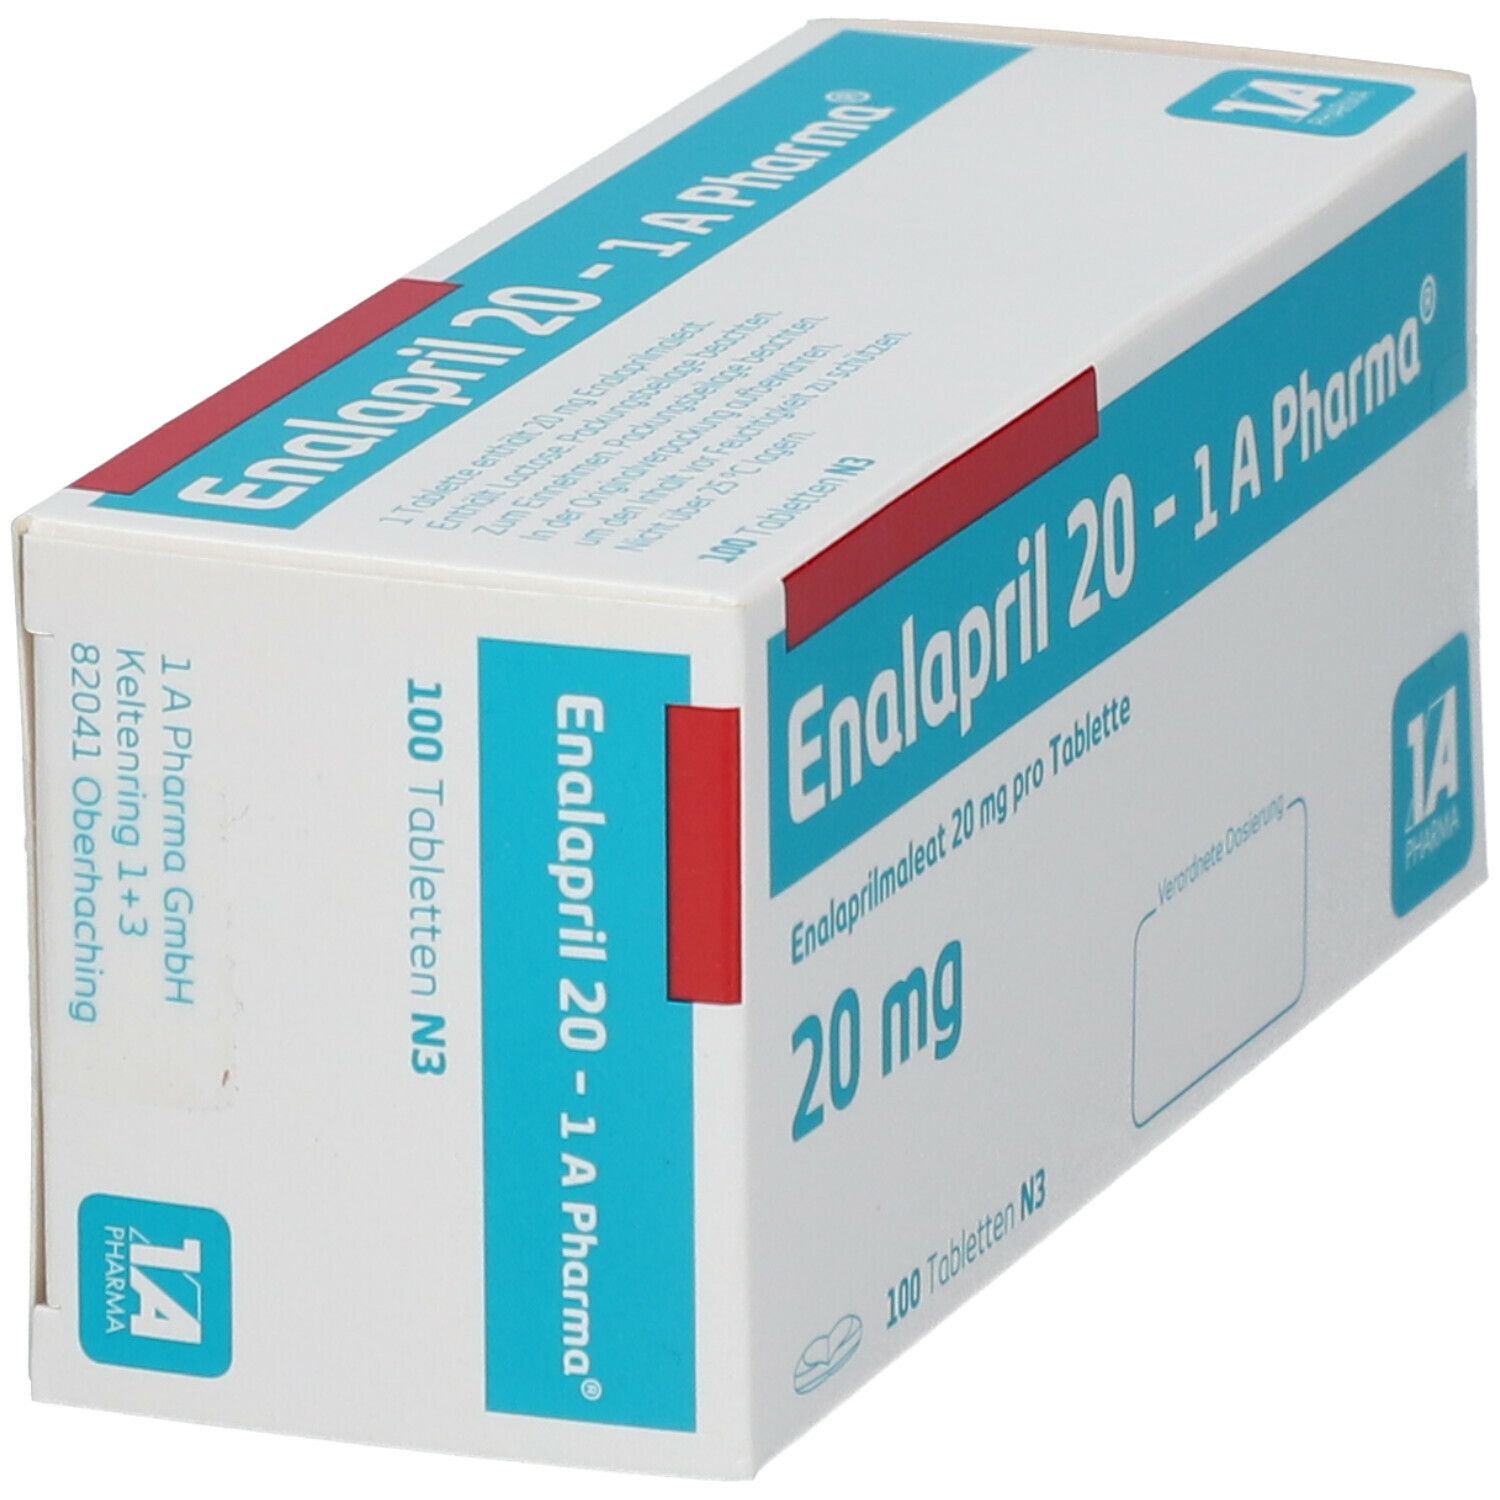 Enalapril 20 1A Pharma®